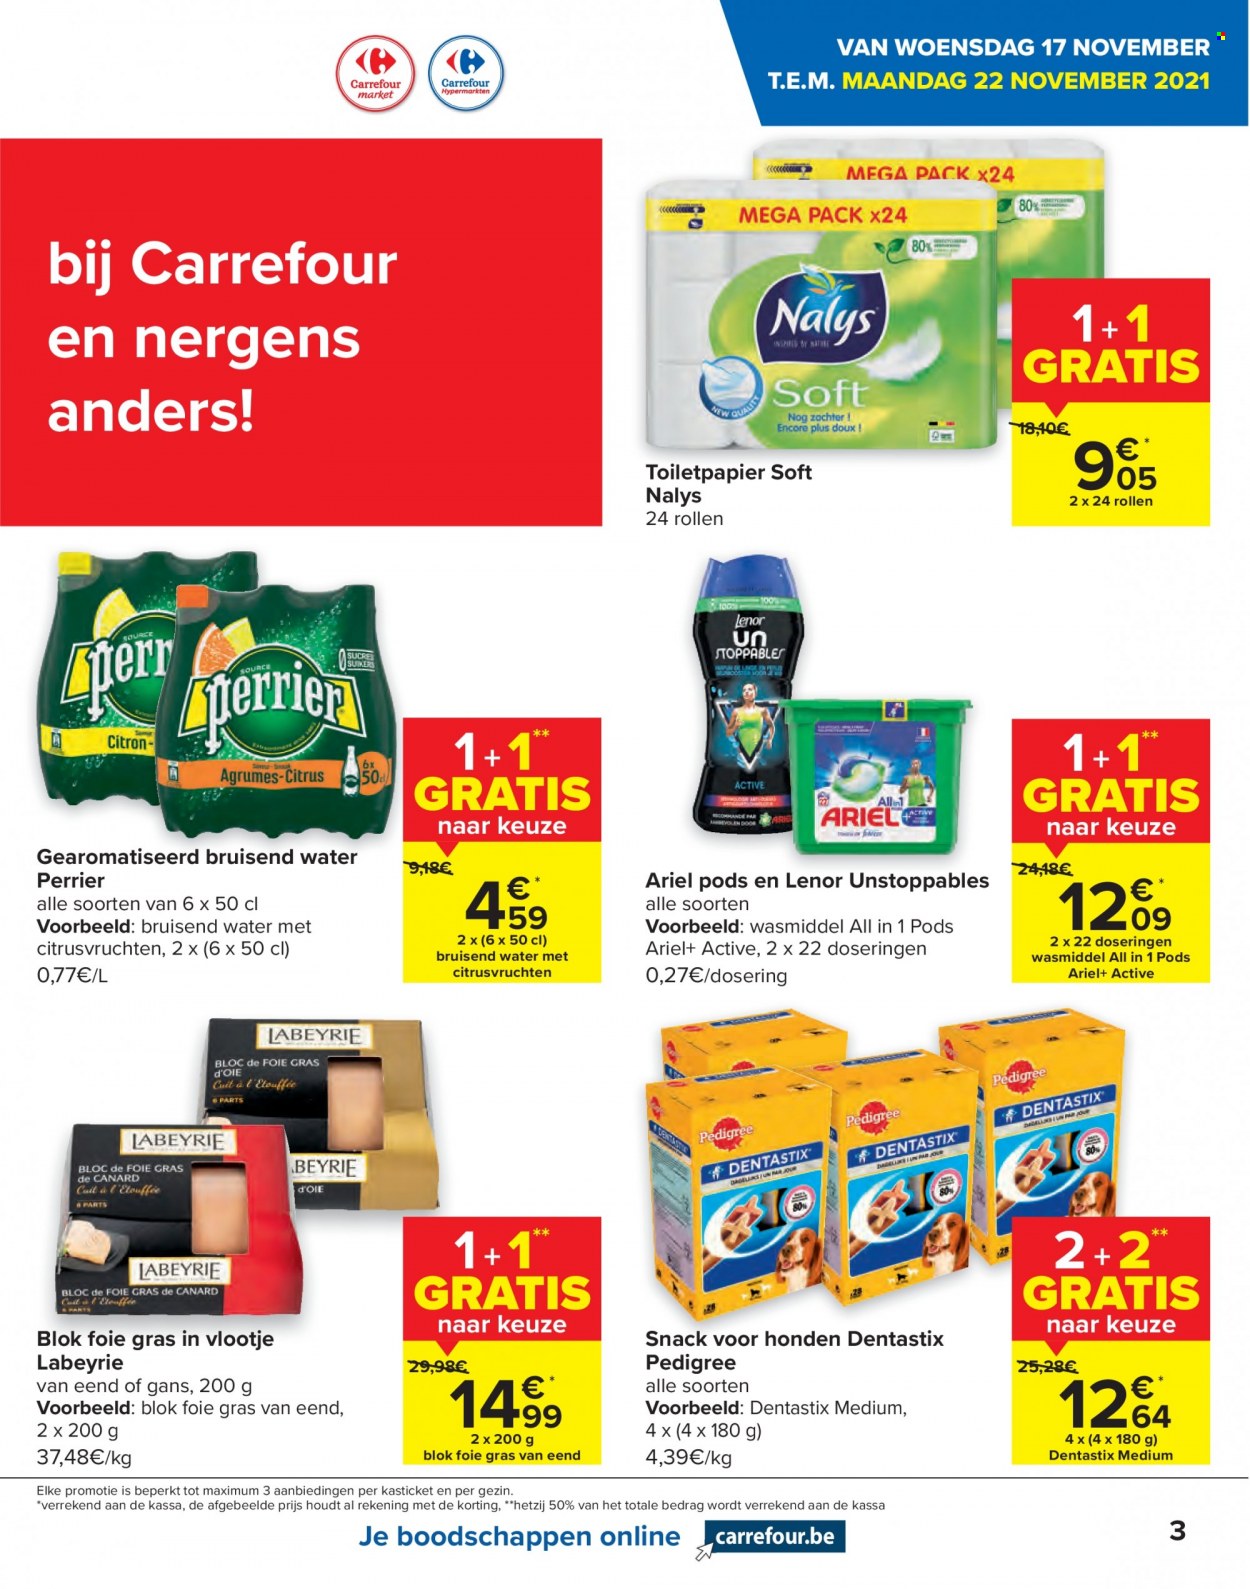 thumbnail - Carrefour-aanbieding - 17/11/2021 - 29/11/2021 -  producten in de aanbieding - foie gras, wasmiddel, Ariel, Lenor, wasmachine pods, Pedigree. Pagina 3.